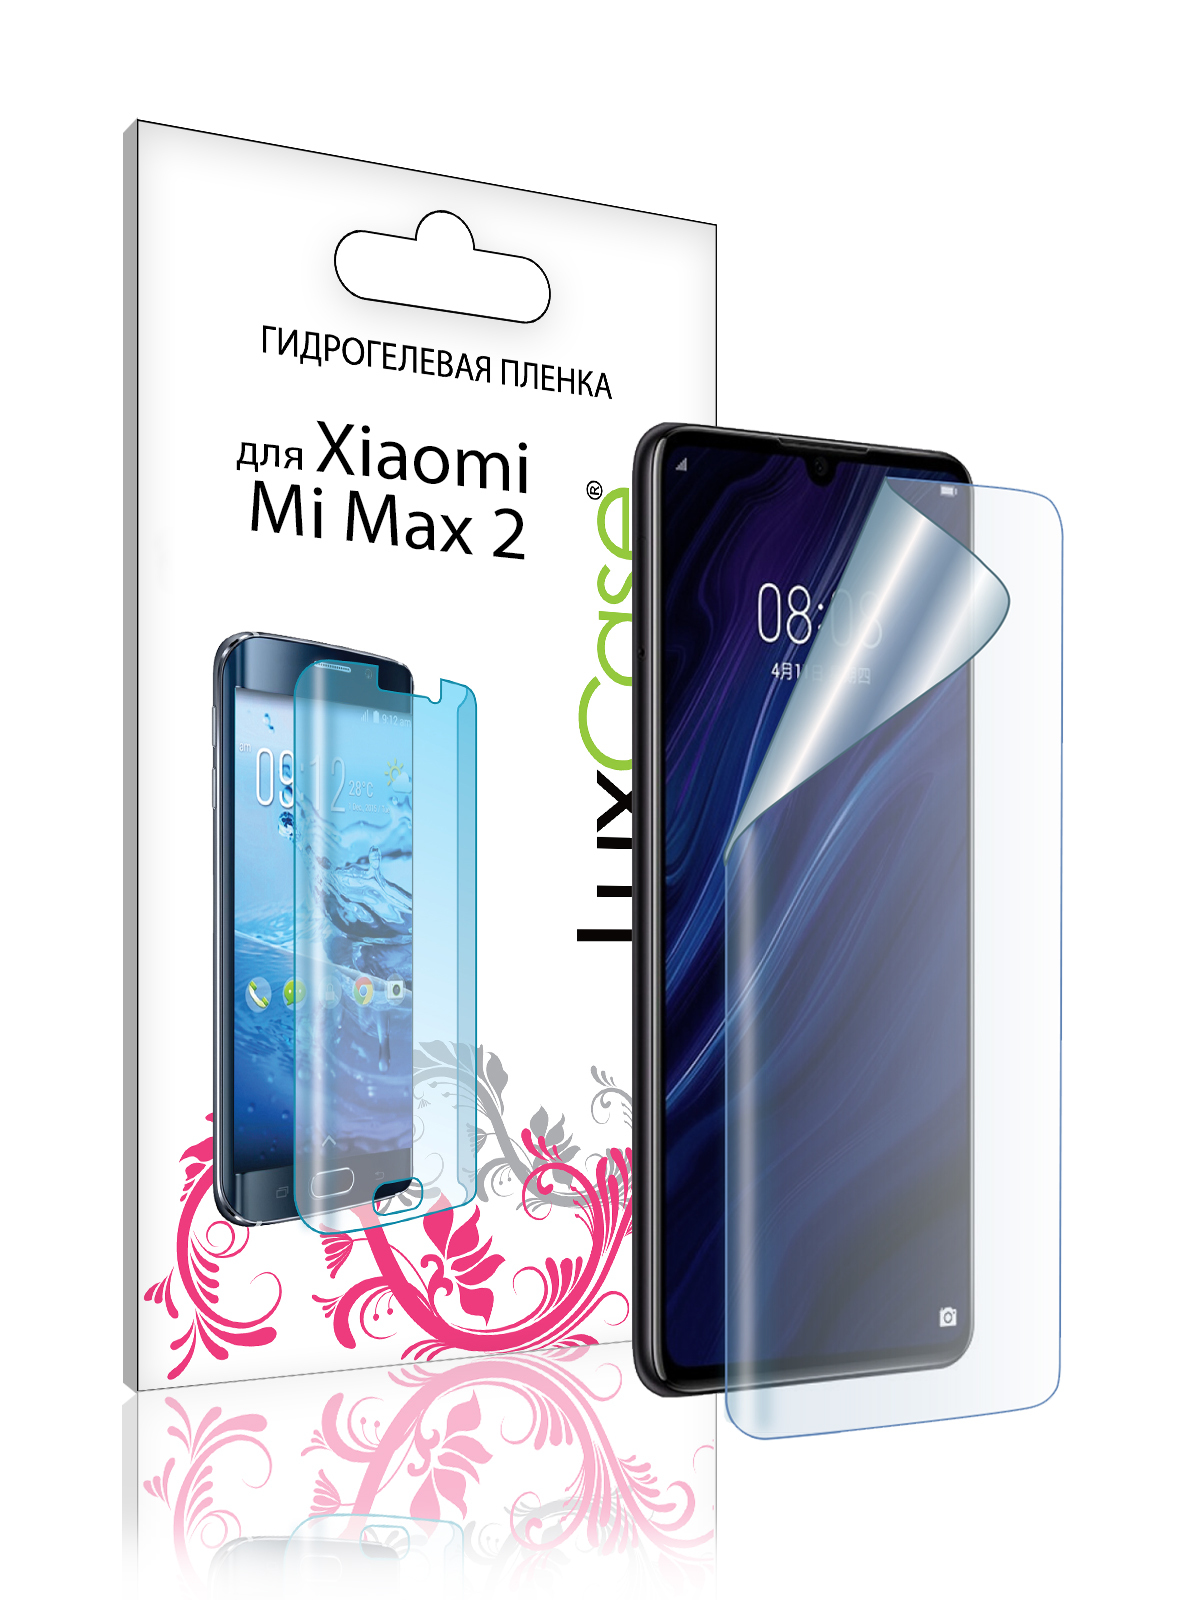 гидрогелевая пленка luxcase для xiaomi mi max 2 0 14mm front transparent 86727 Гидрогелевая пленка LuxCase для Xiaomi Mi Max 2 0.14mm Front Transparent 86727